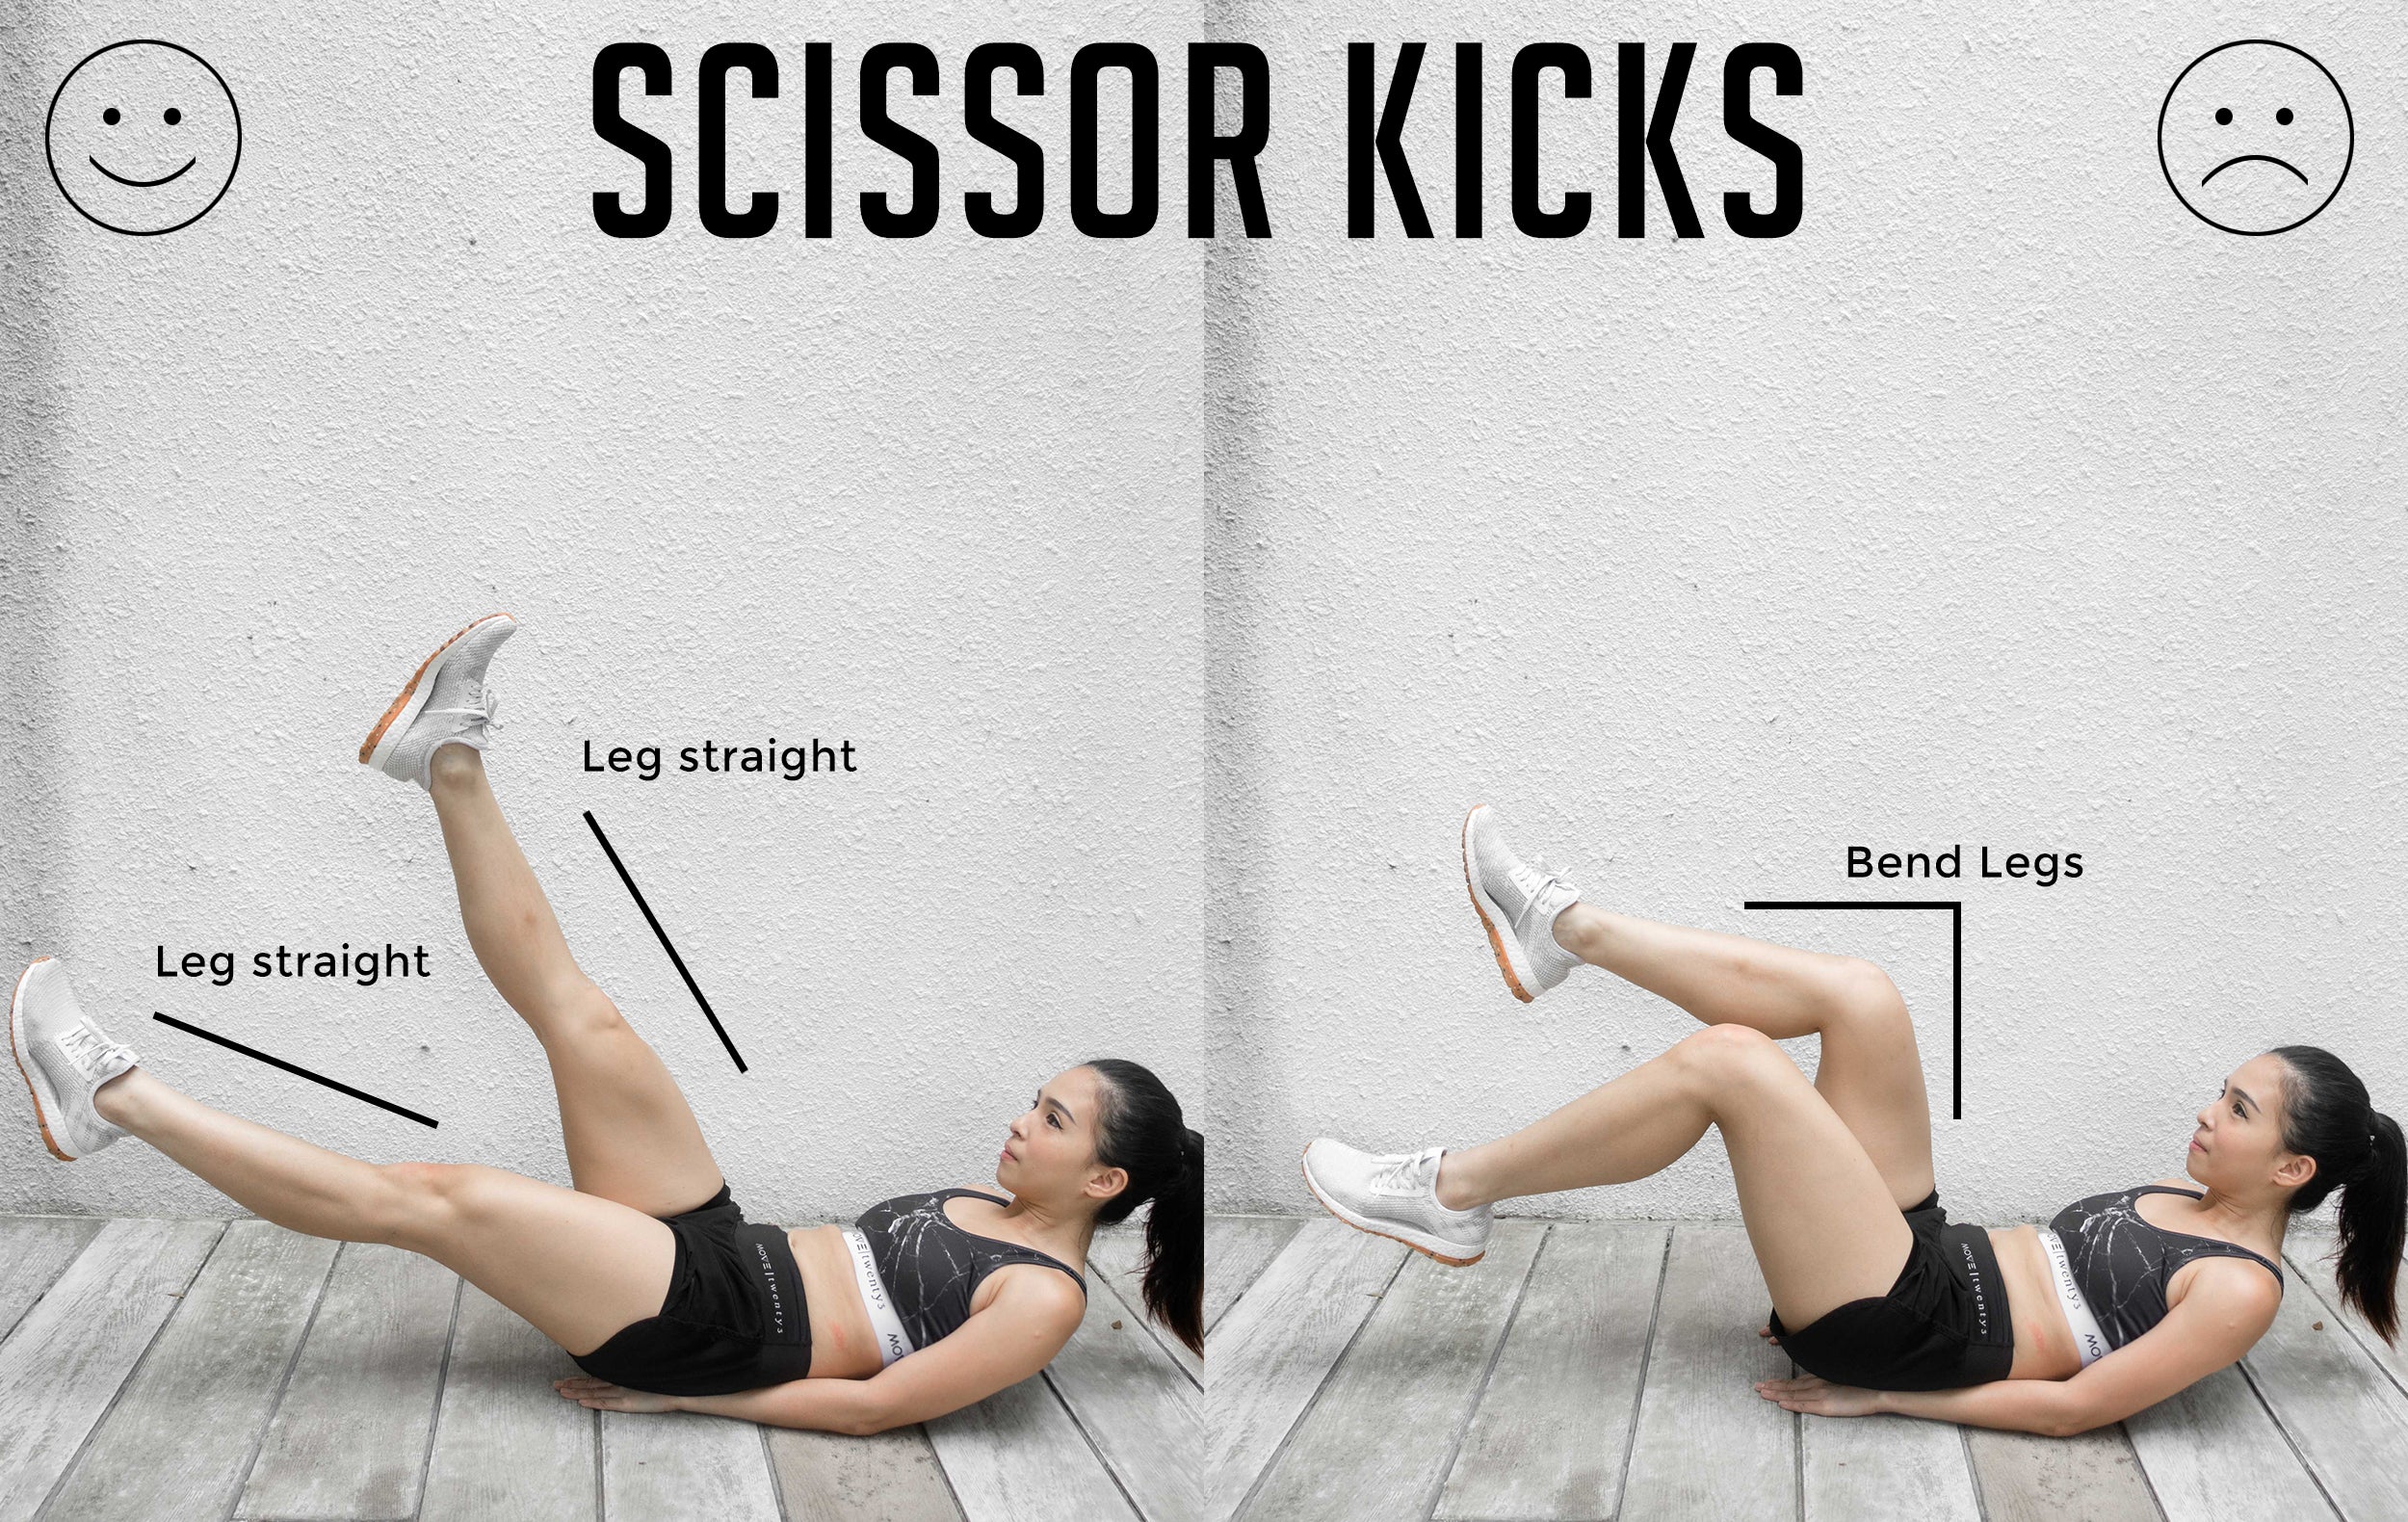 Scissor Kicks Good Versus Bad Form